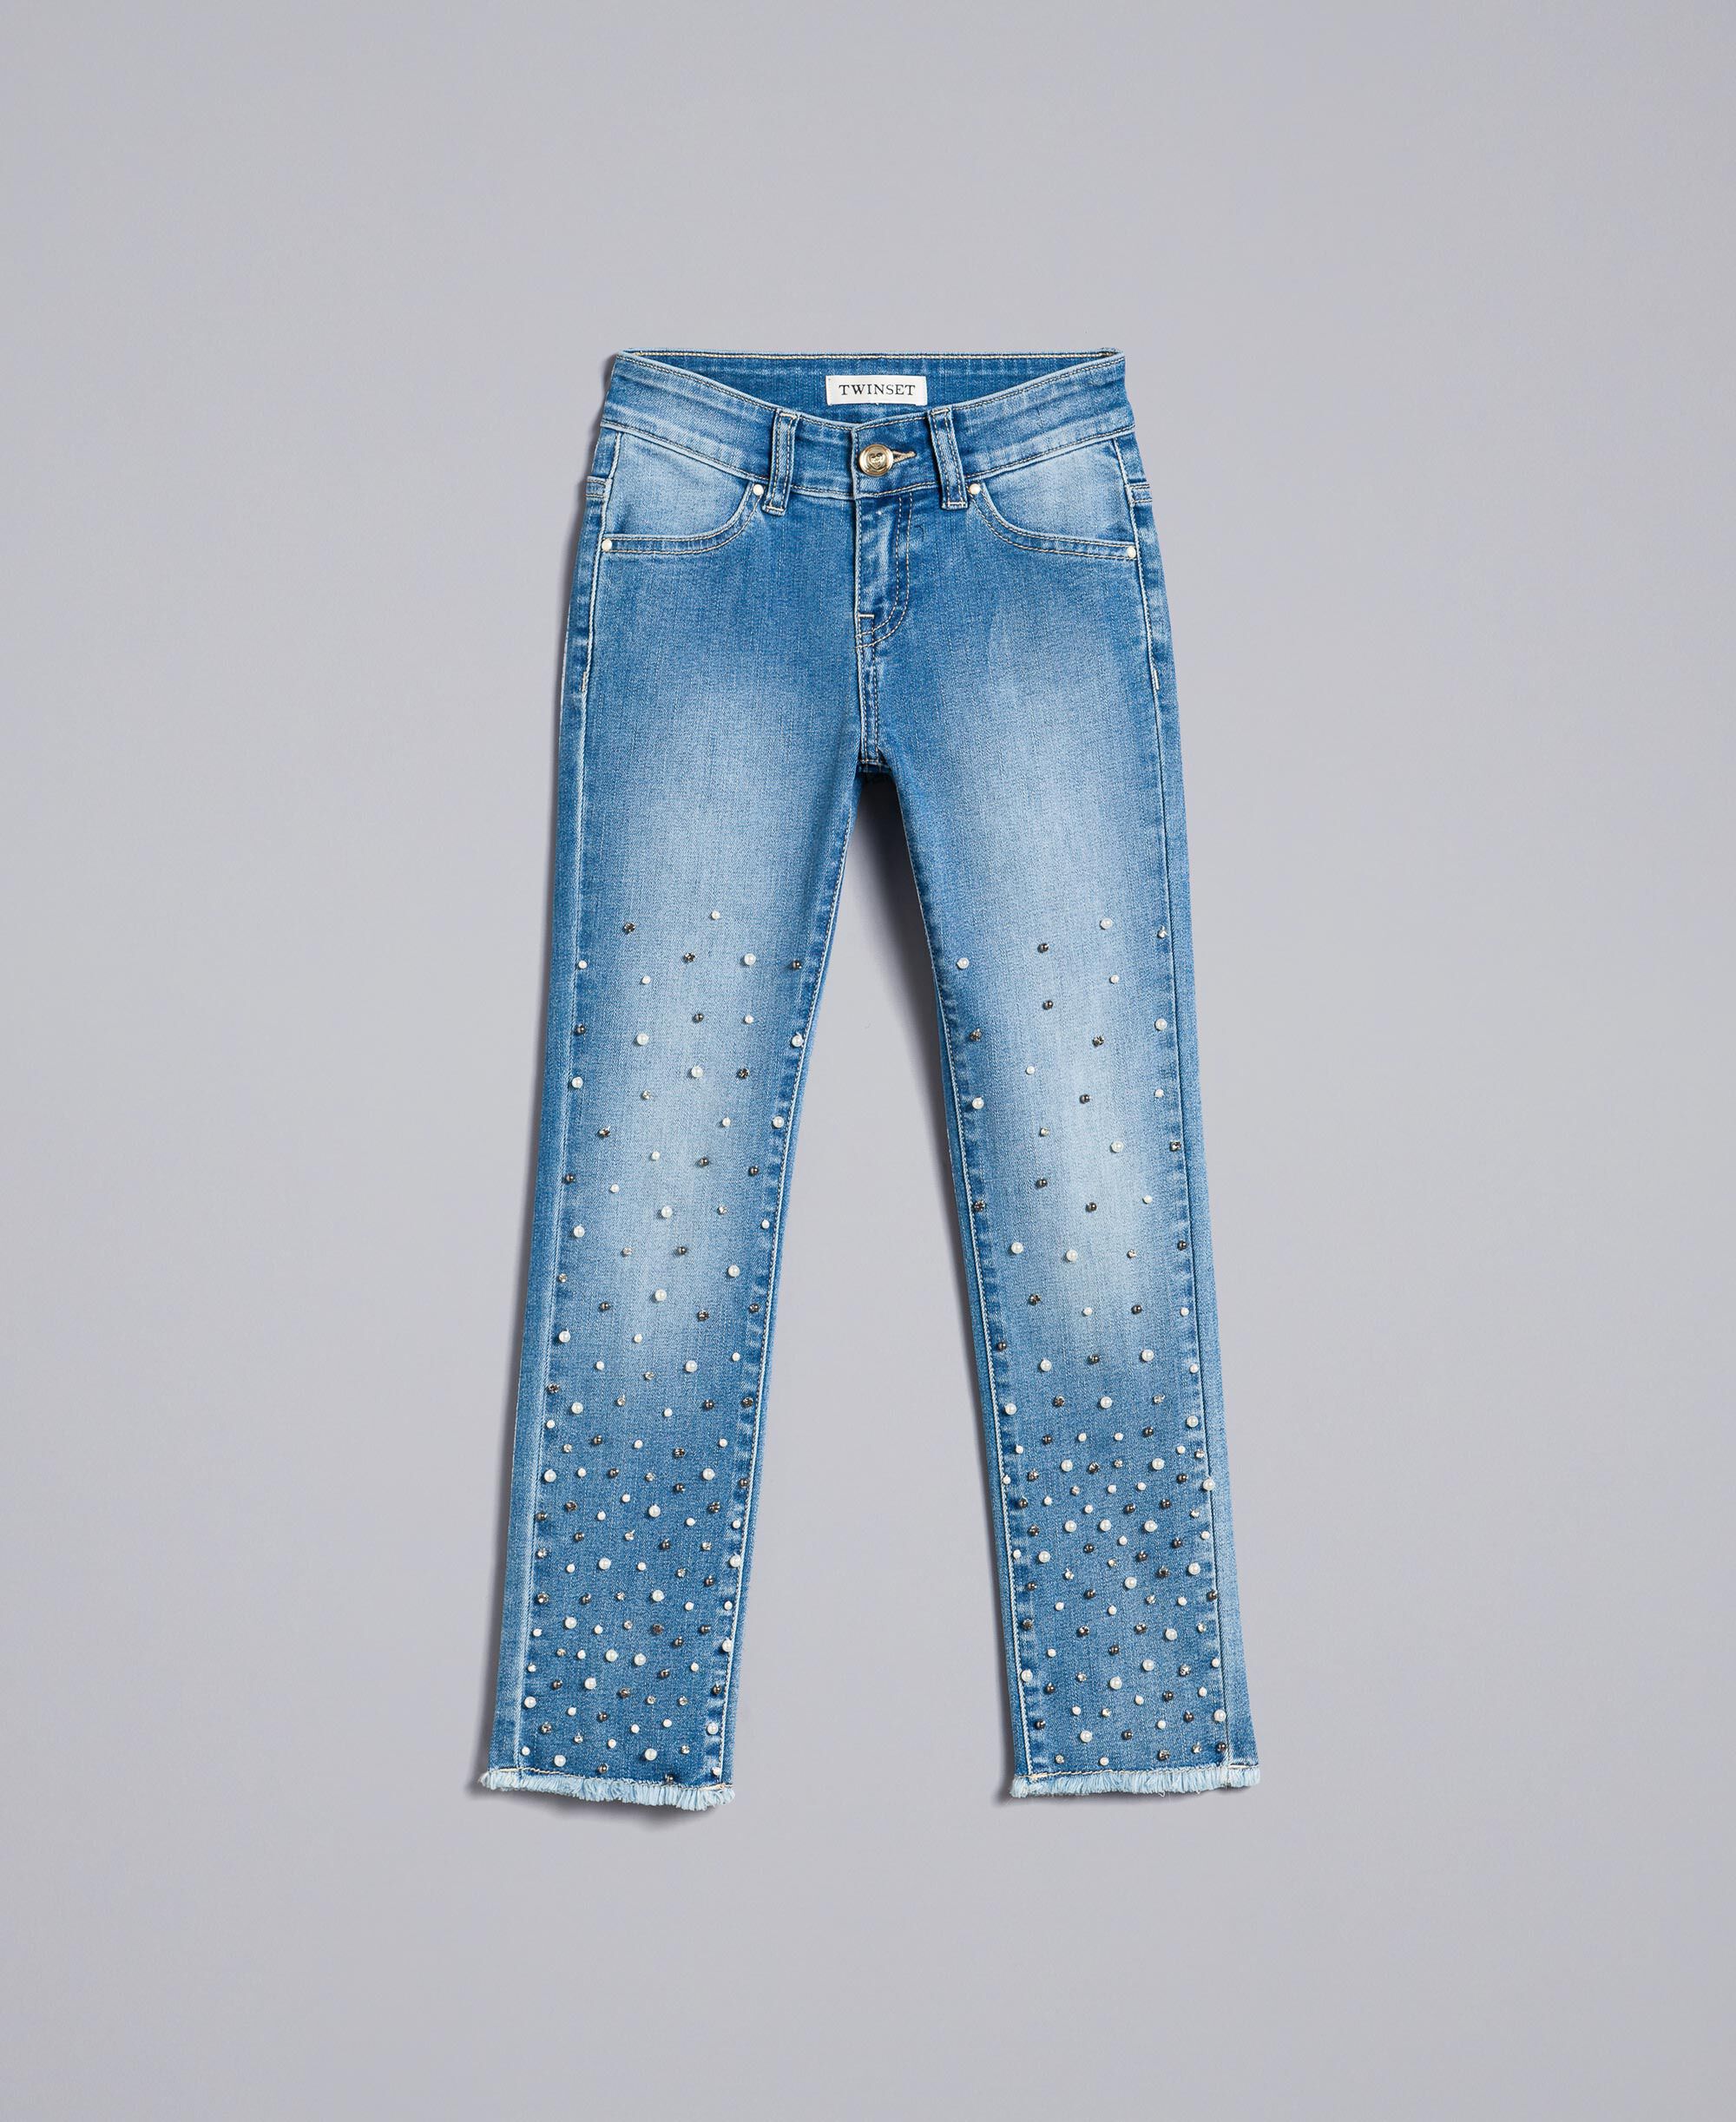 jeans with rhinestones on them